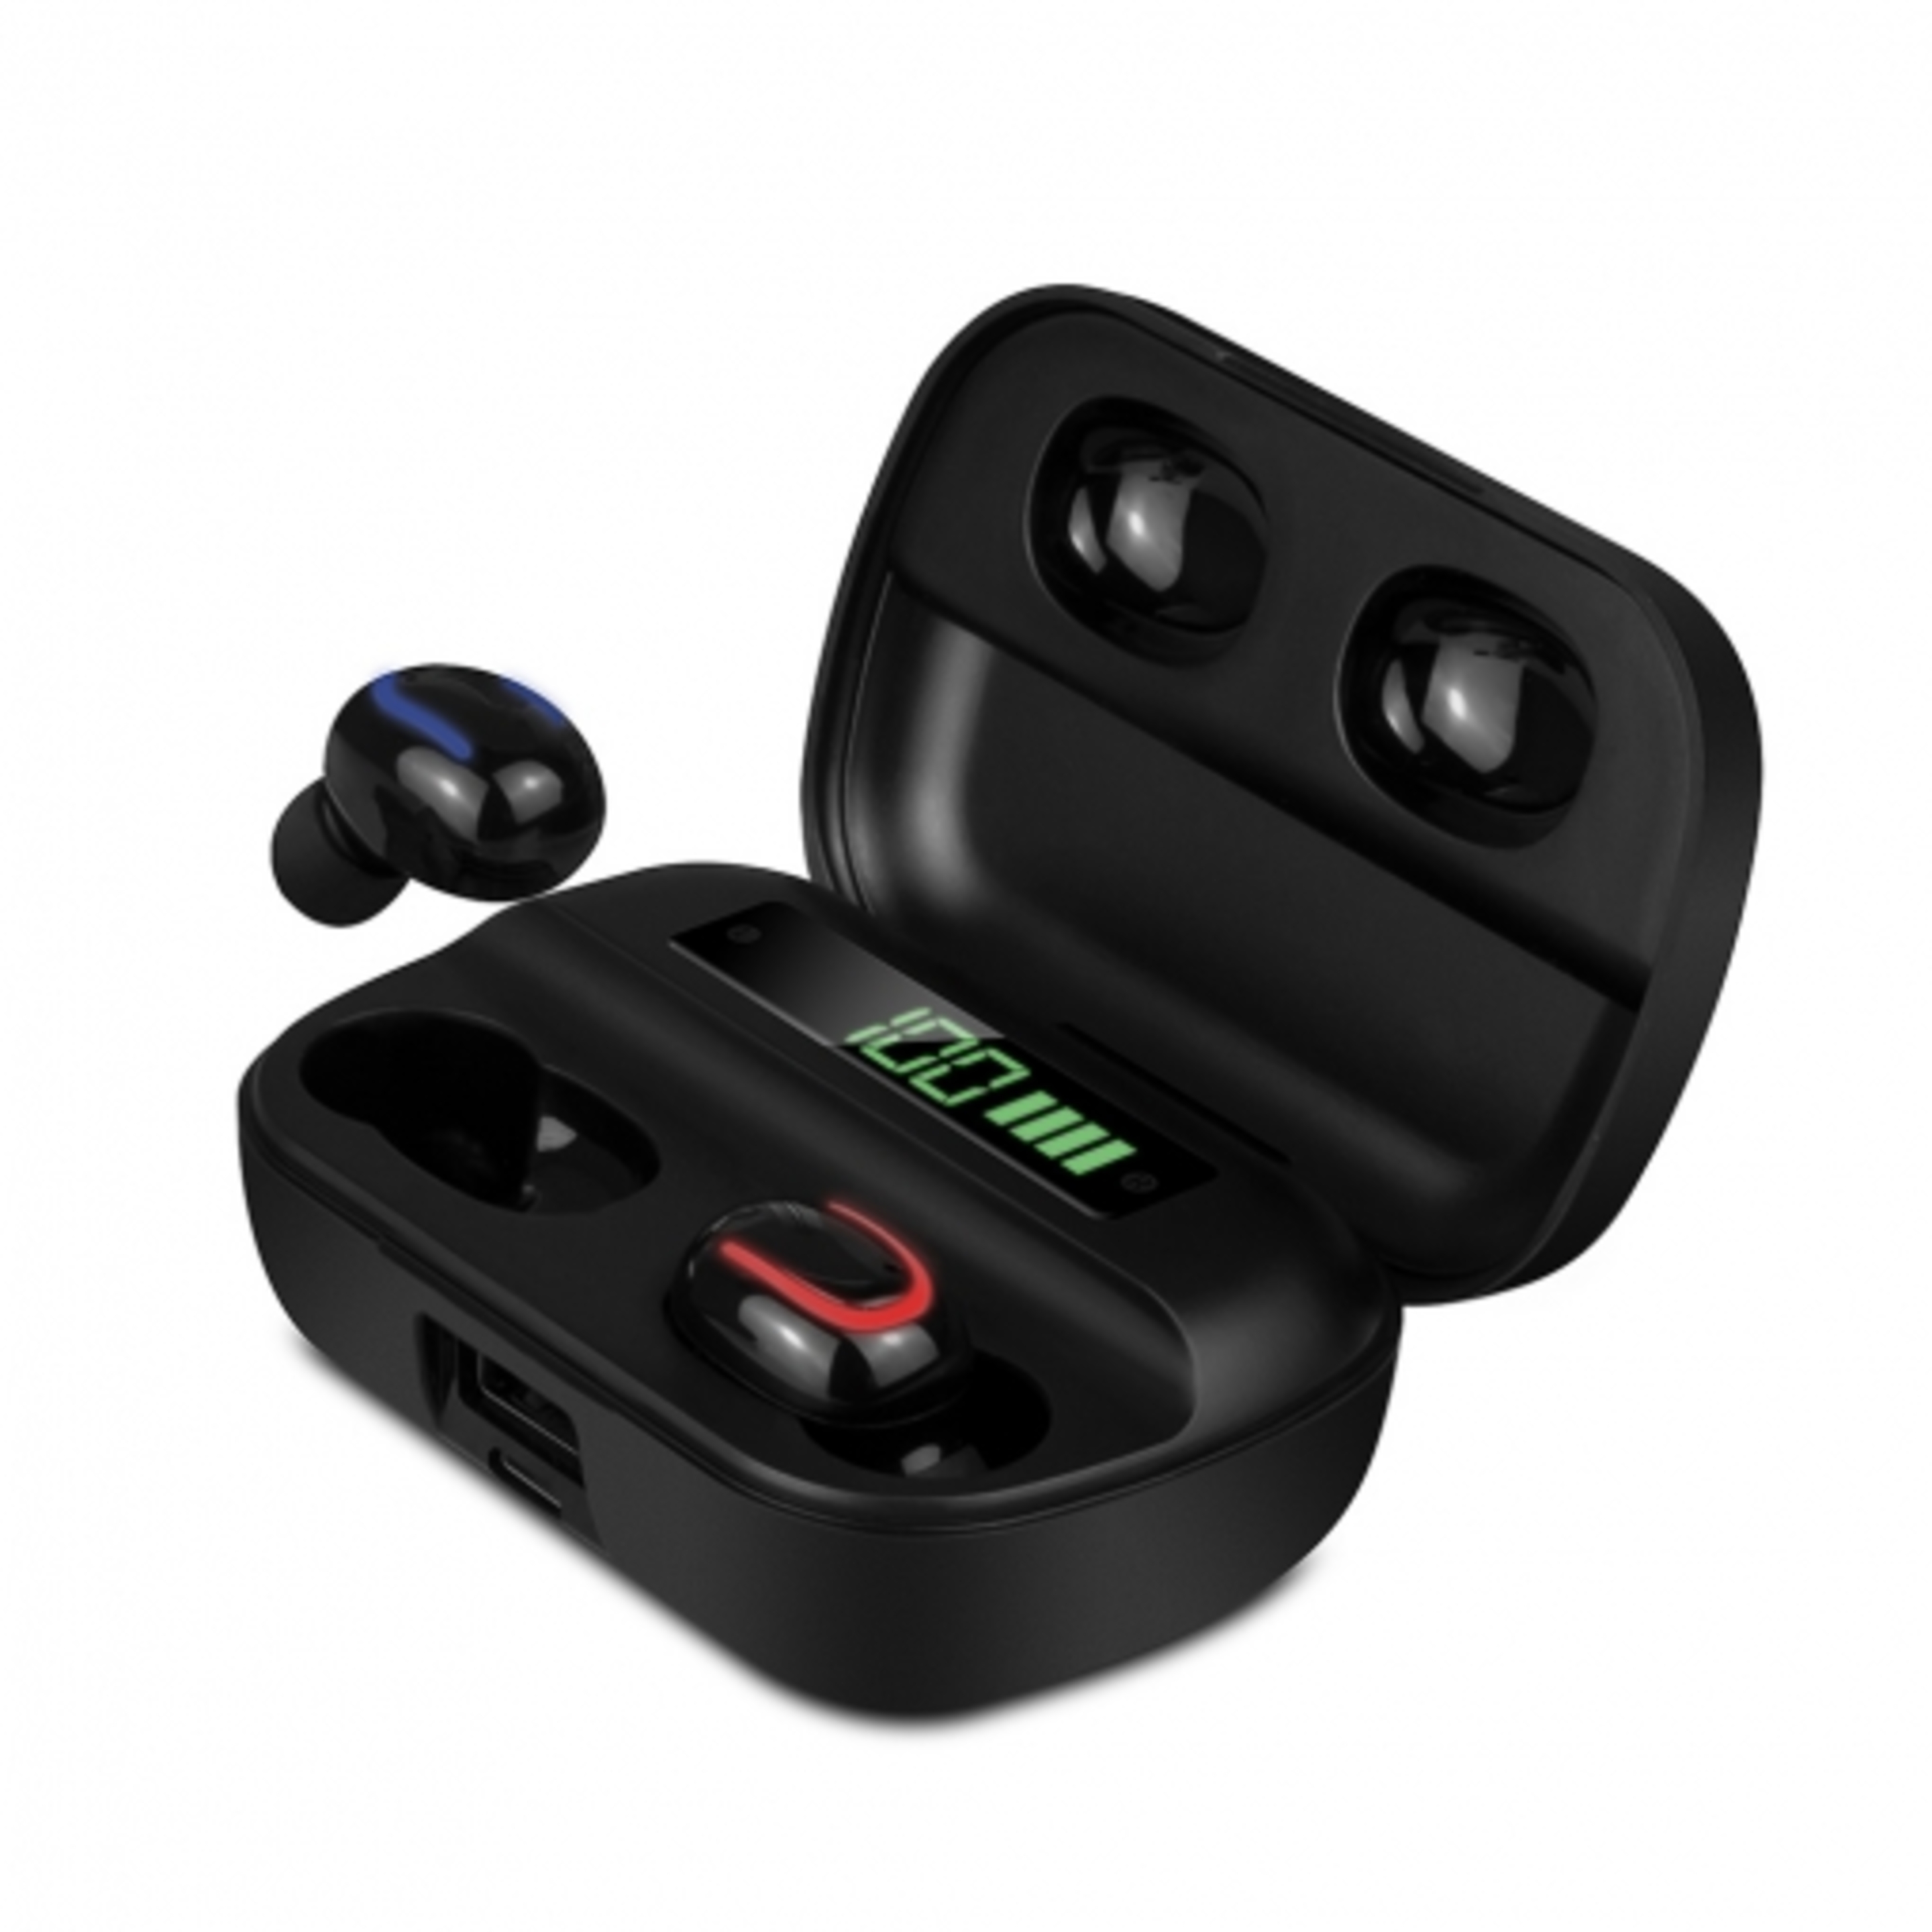 Auriculares Smartek Ipx5 Bluetooth + Power Bank - negro - 